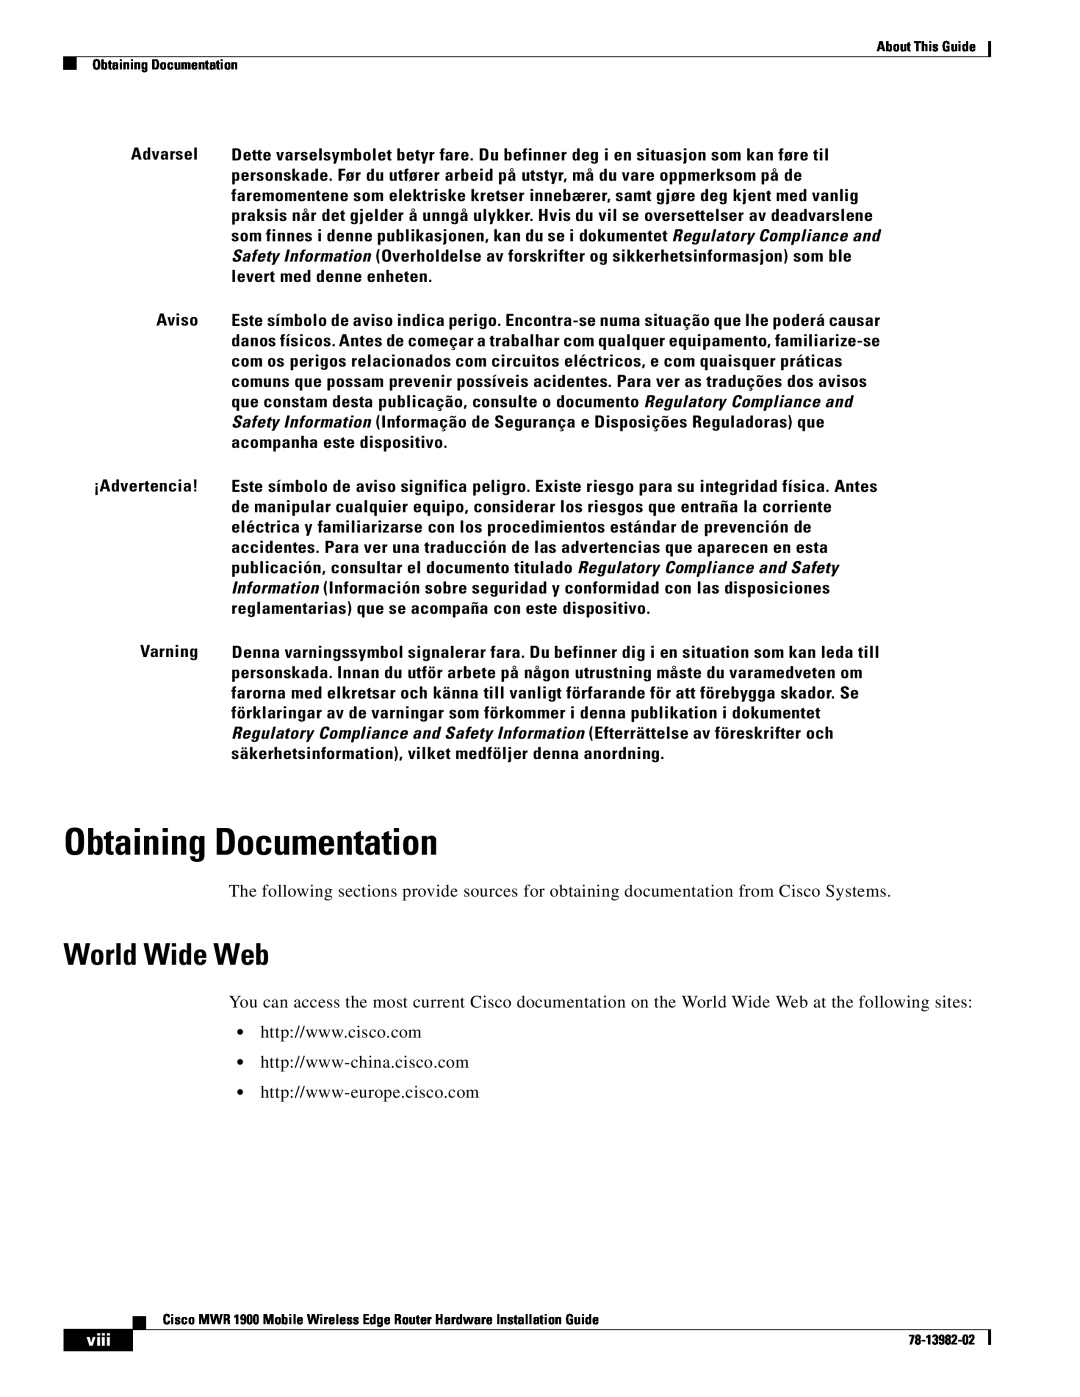 Cisco Systems MWR 1900 manual Obtaining Documentation, World Wide Web, viii 